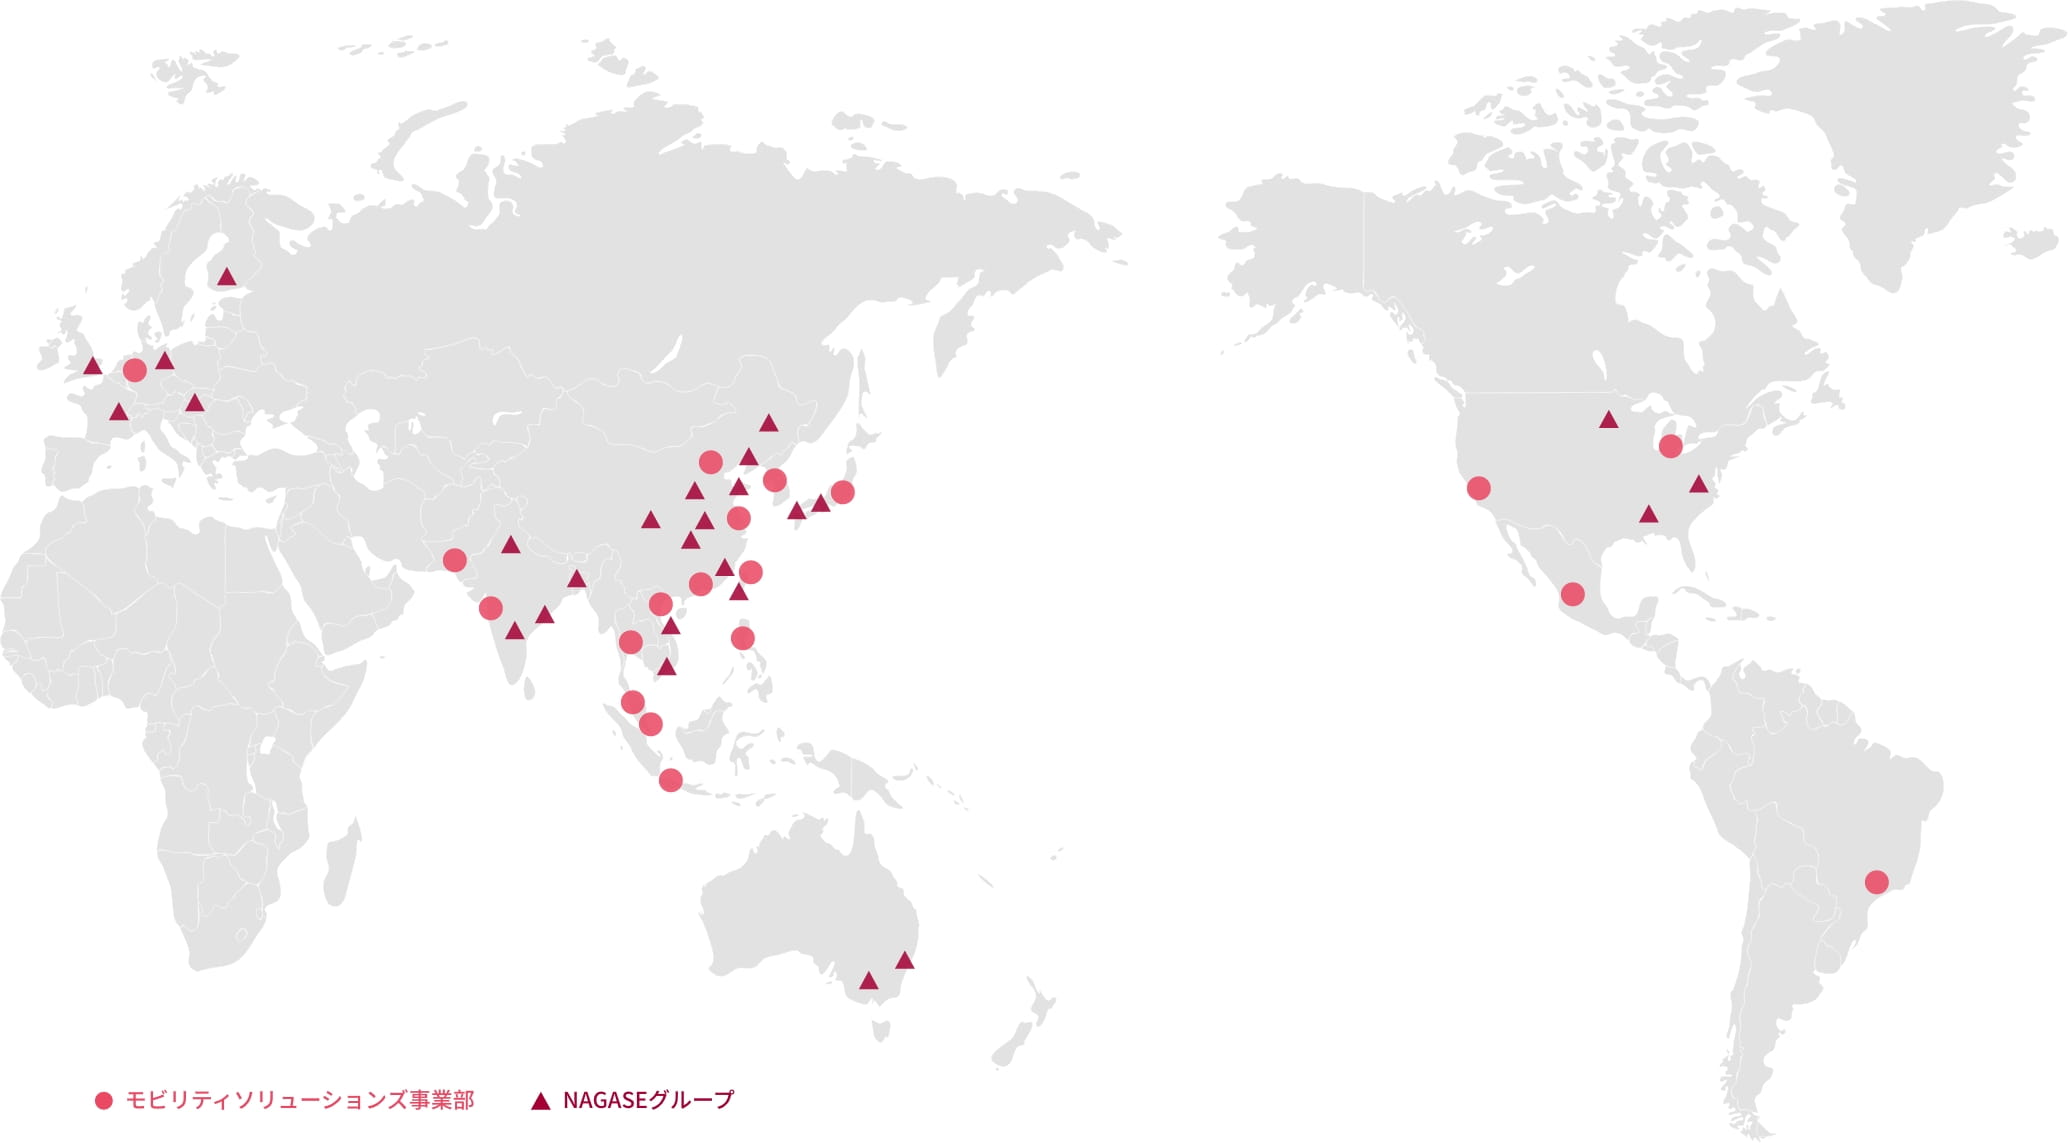 NAGASEグループとモビリティソリューションズ事業部の国内外拠点を示す地図